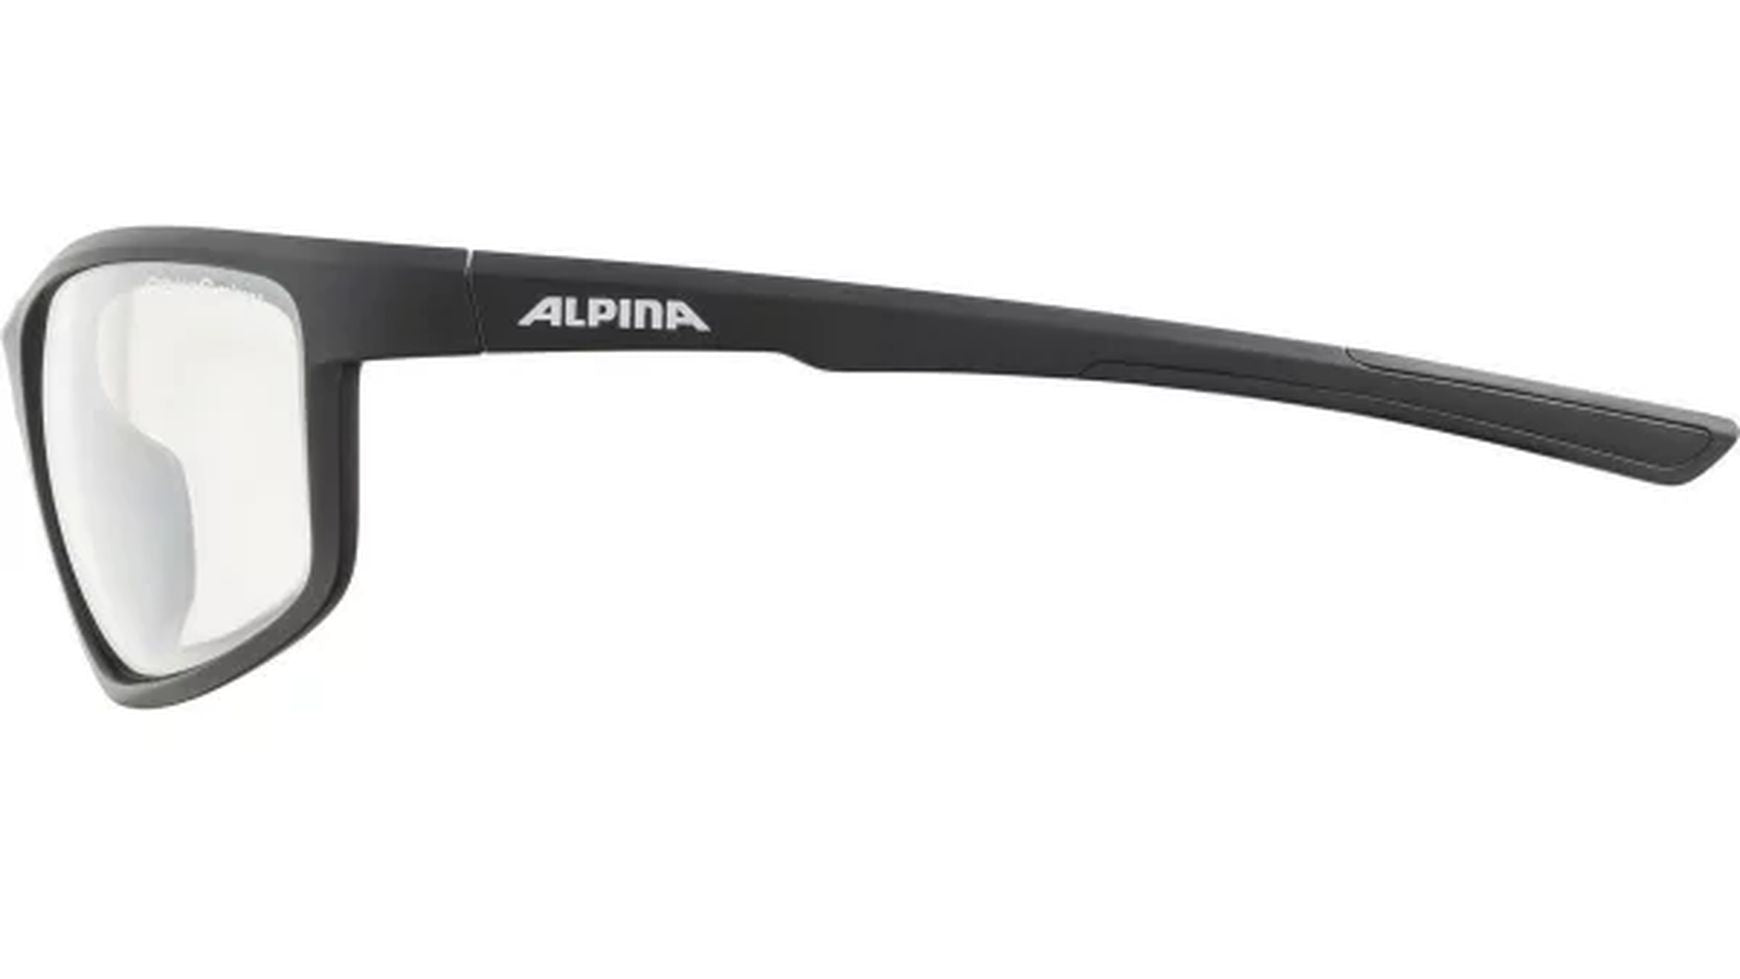 Alpina Defey Fahrradbrille image 11